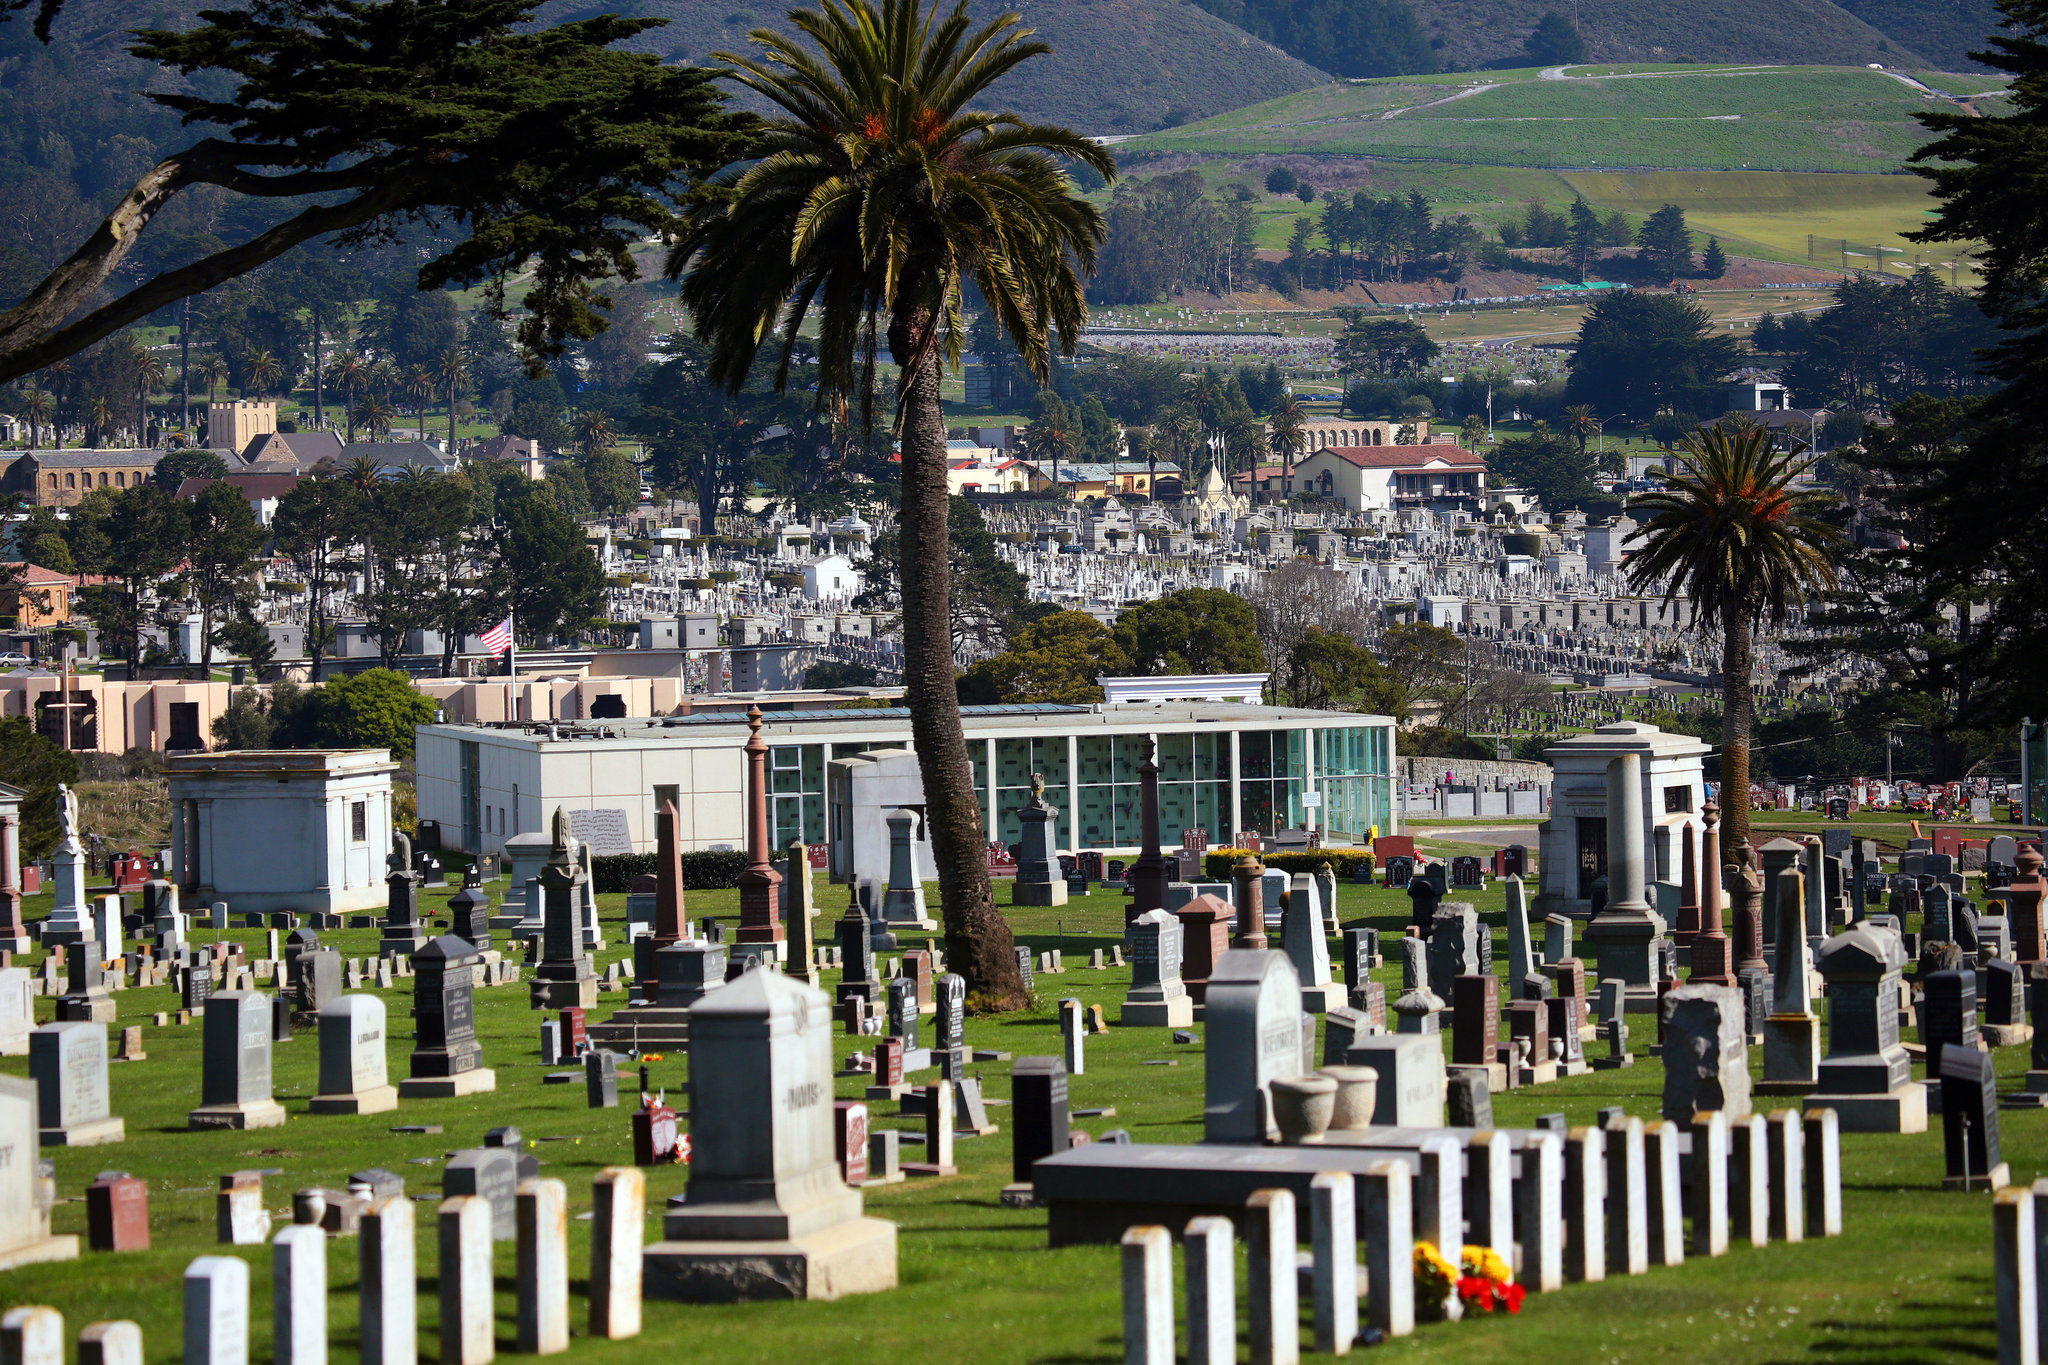 Dying Industries - cemeteries